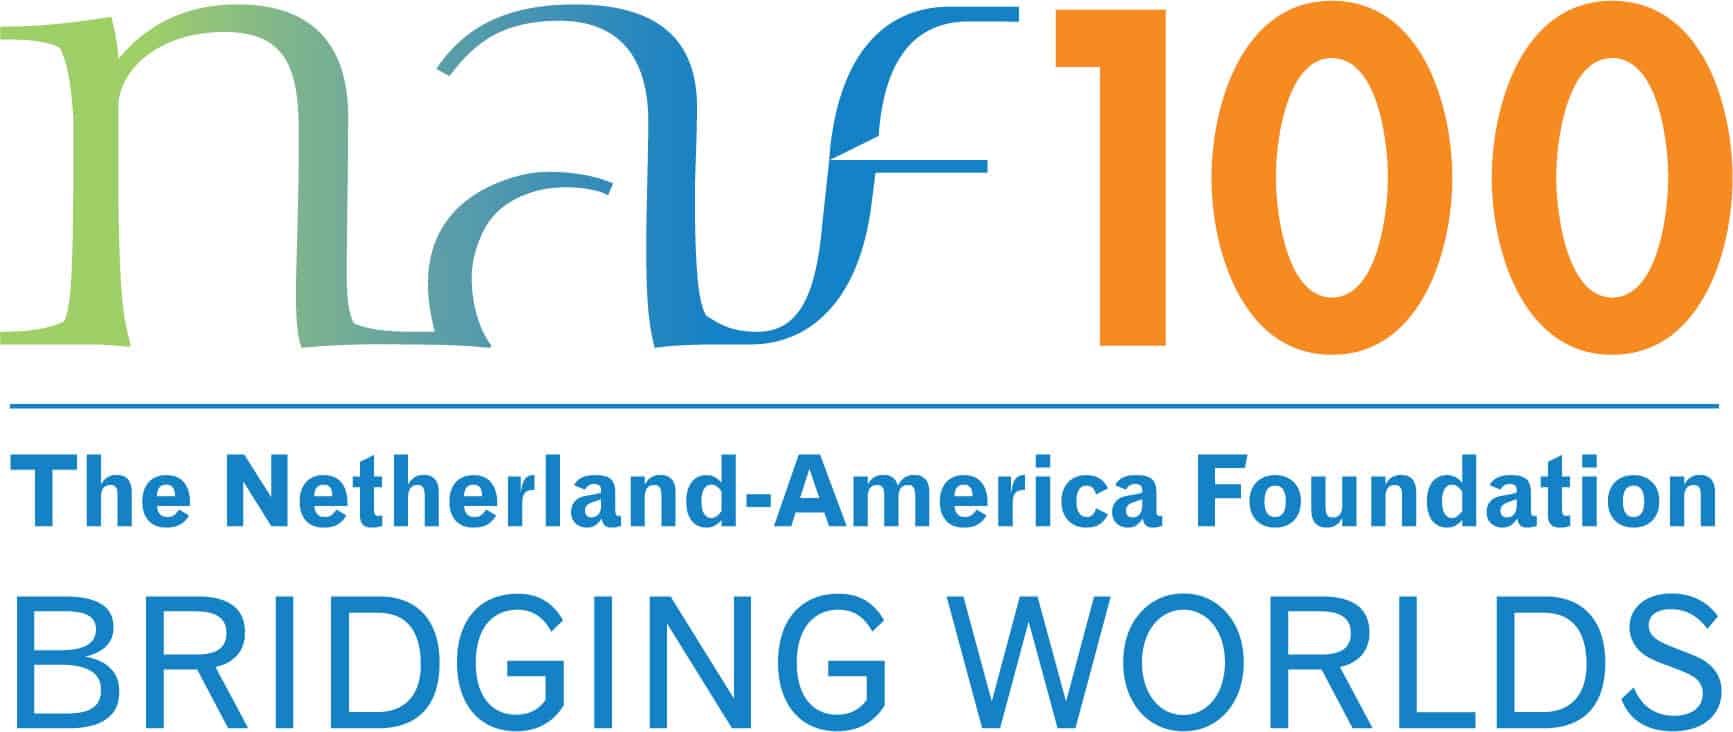 NAF_100Years_Logo_BridgingWorlds